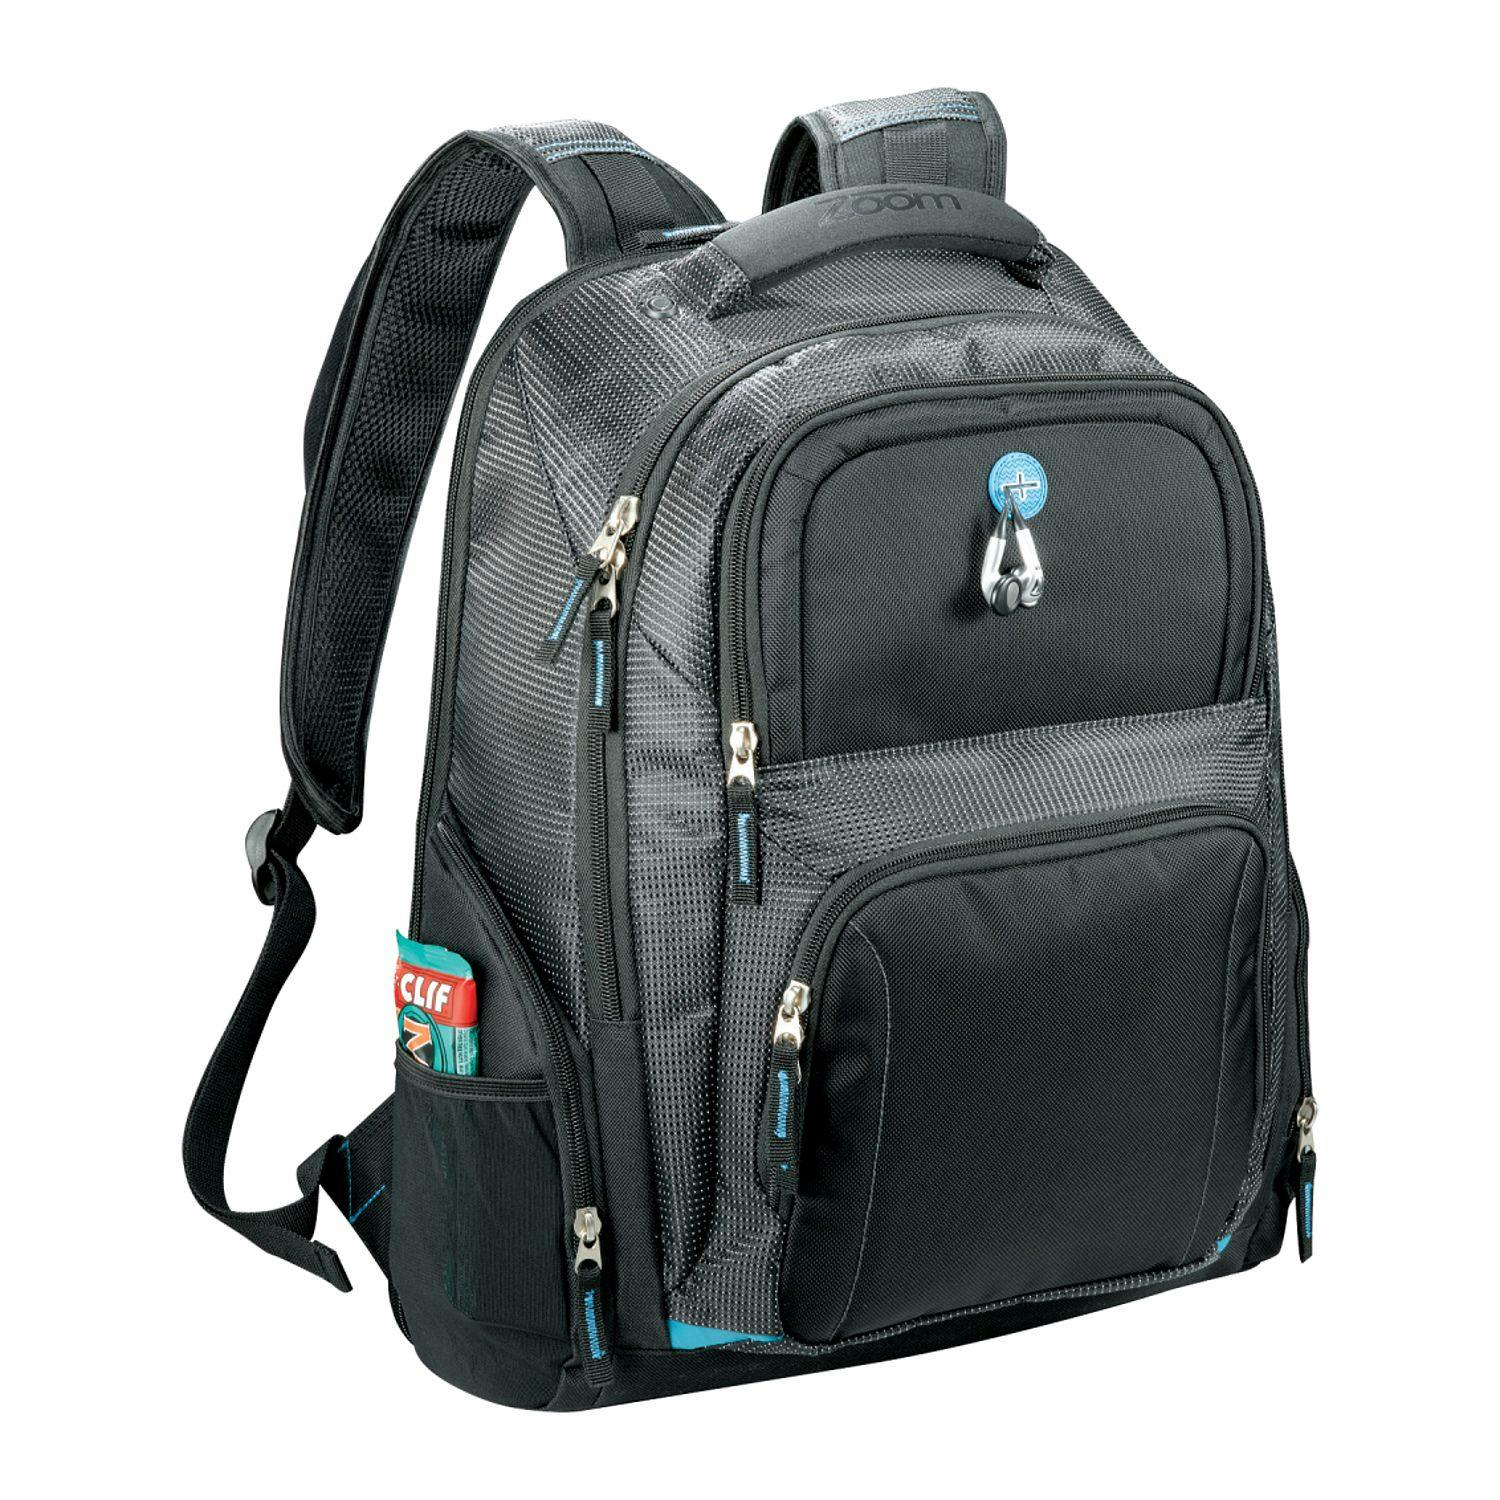 Zoom TSA 15" Computer Backpack - additional Image 1